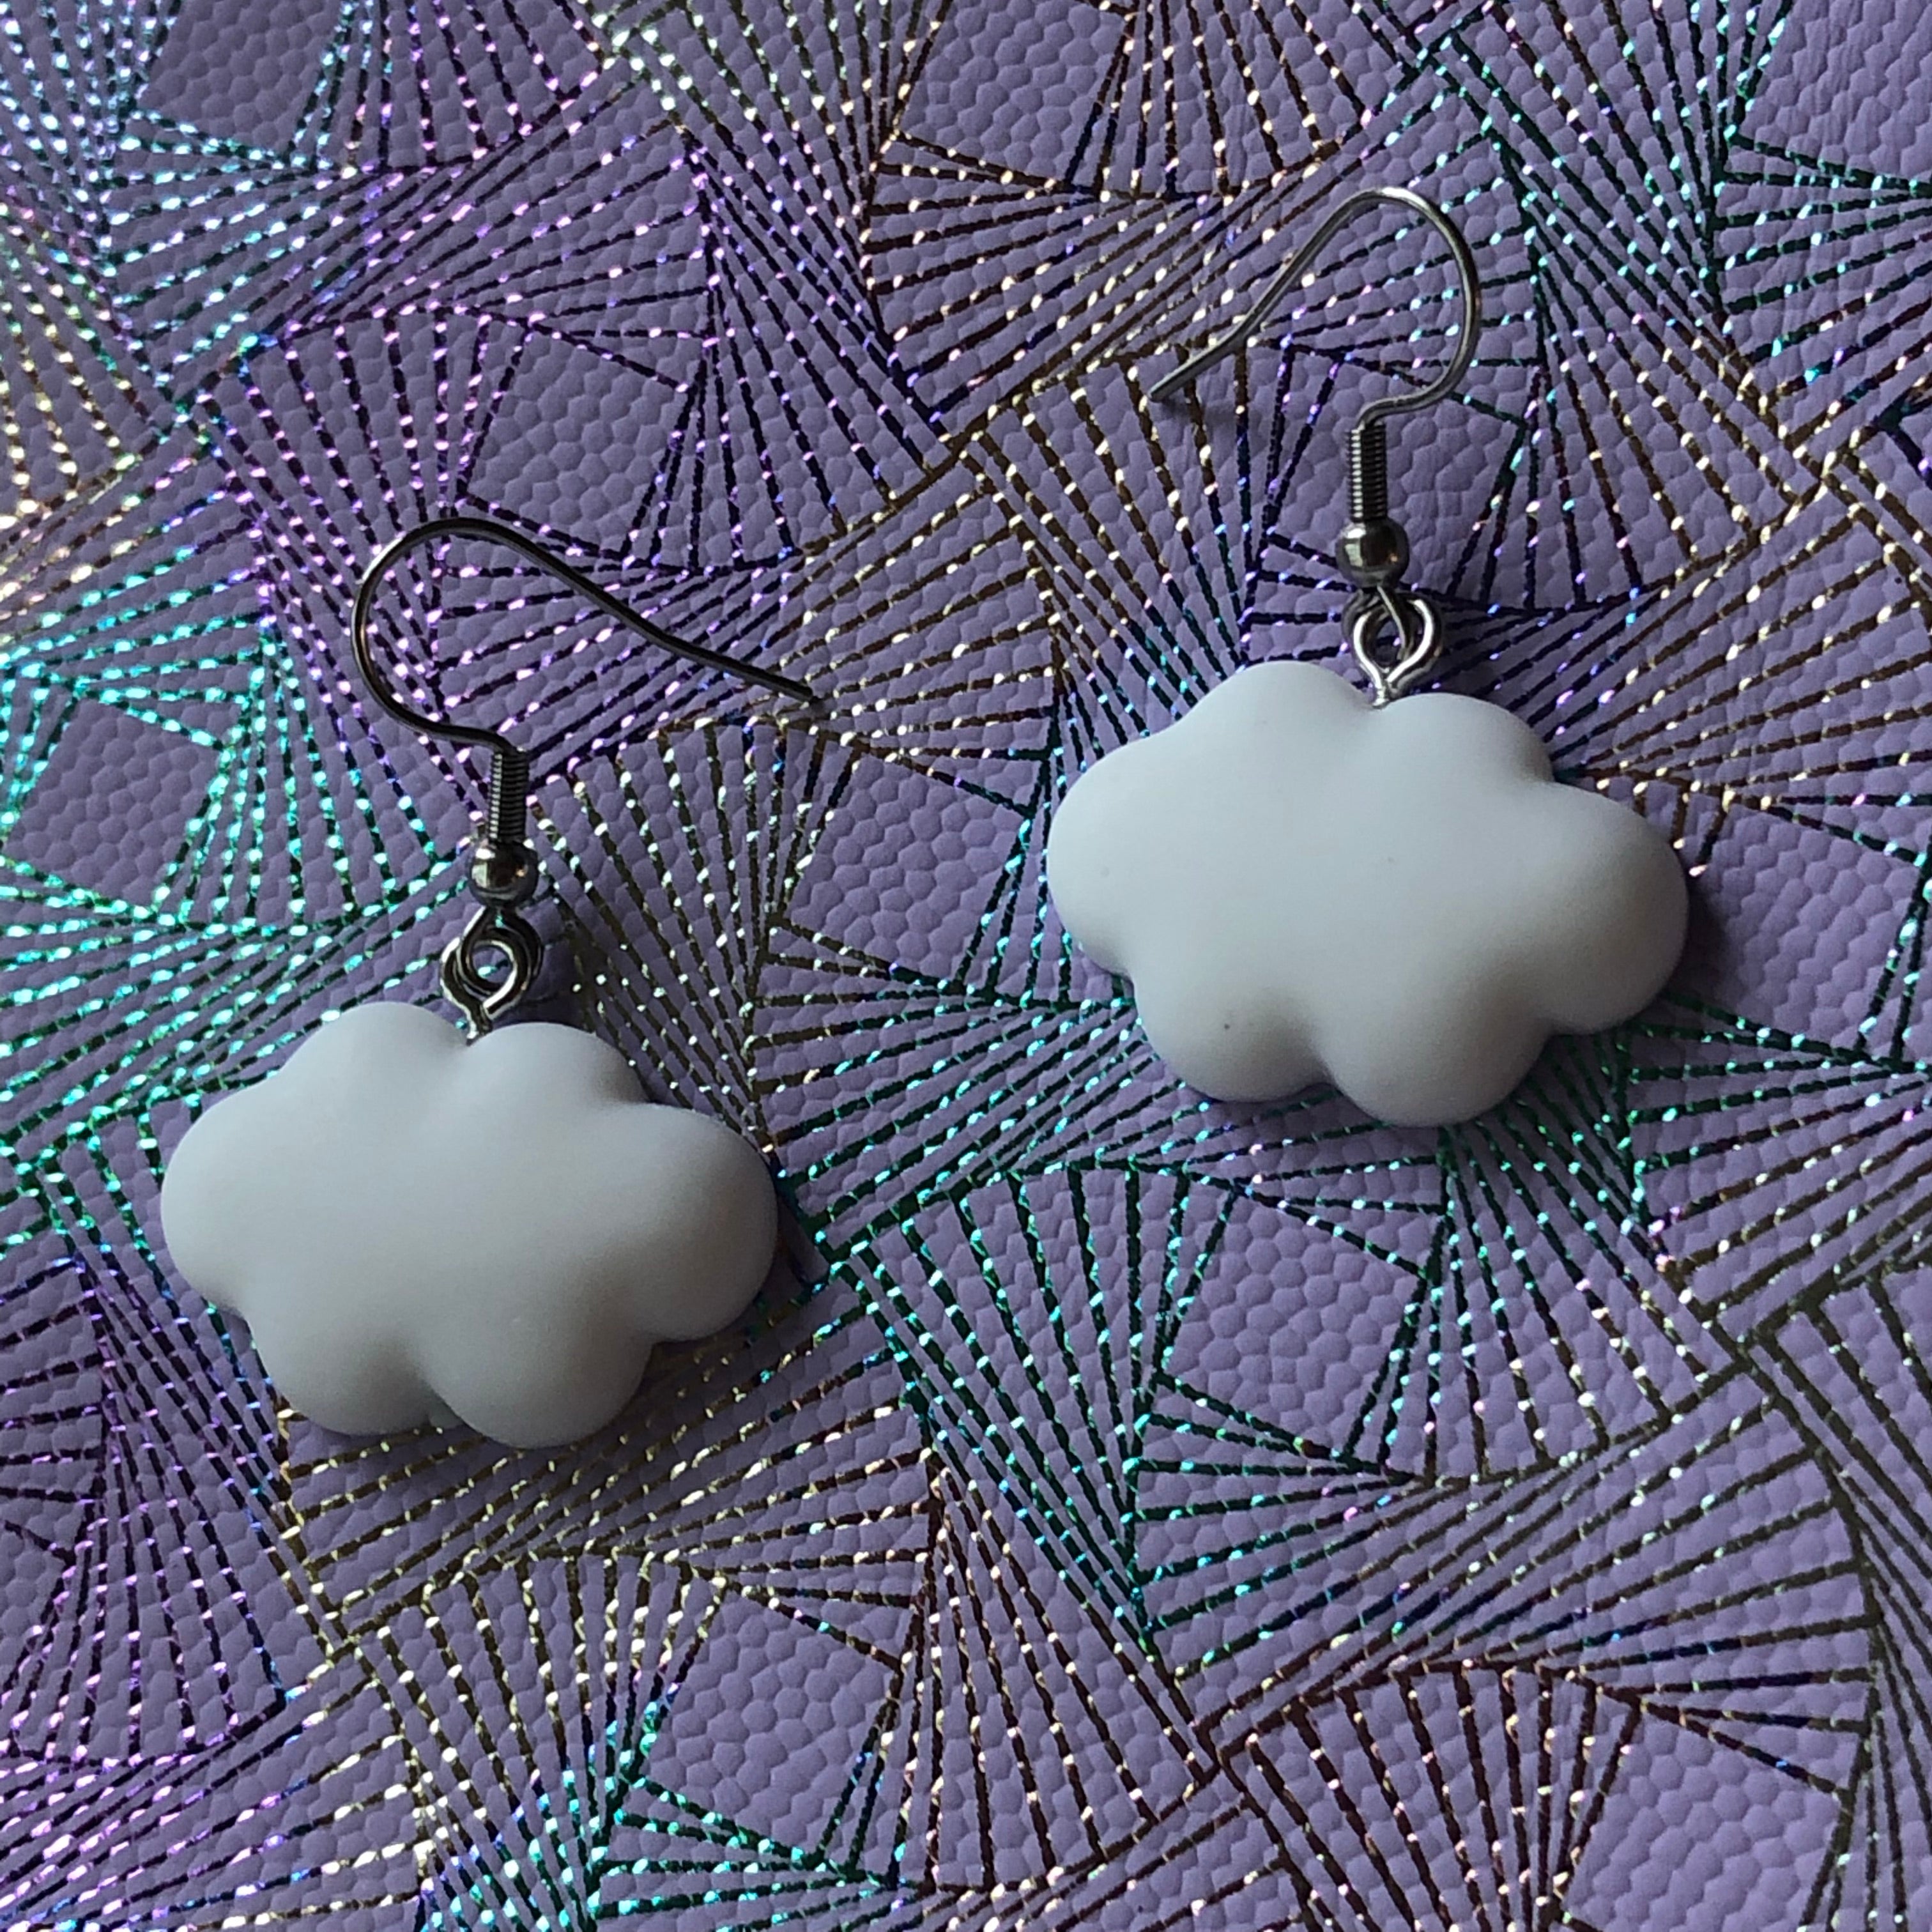 Cloud Earrings